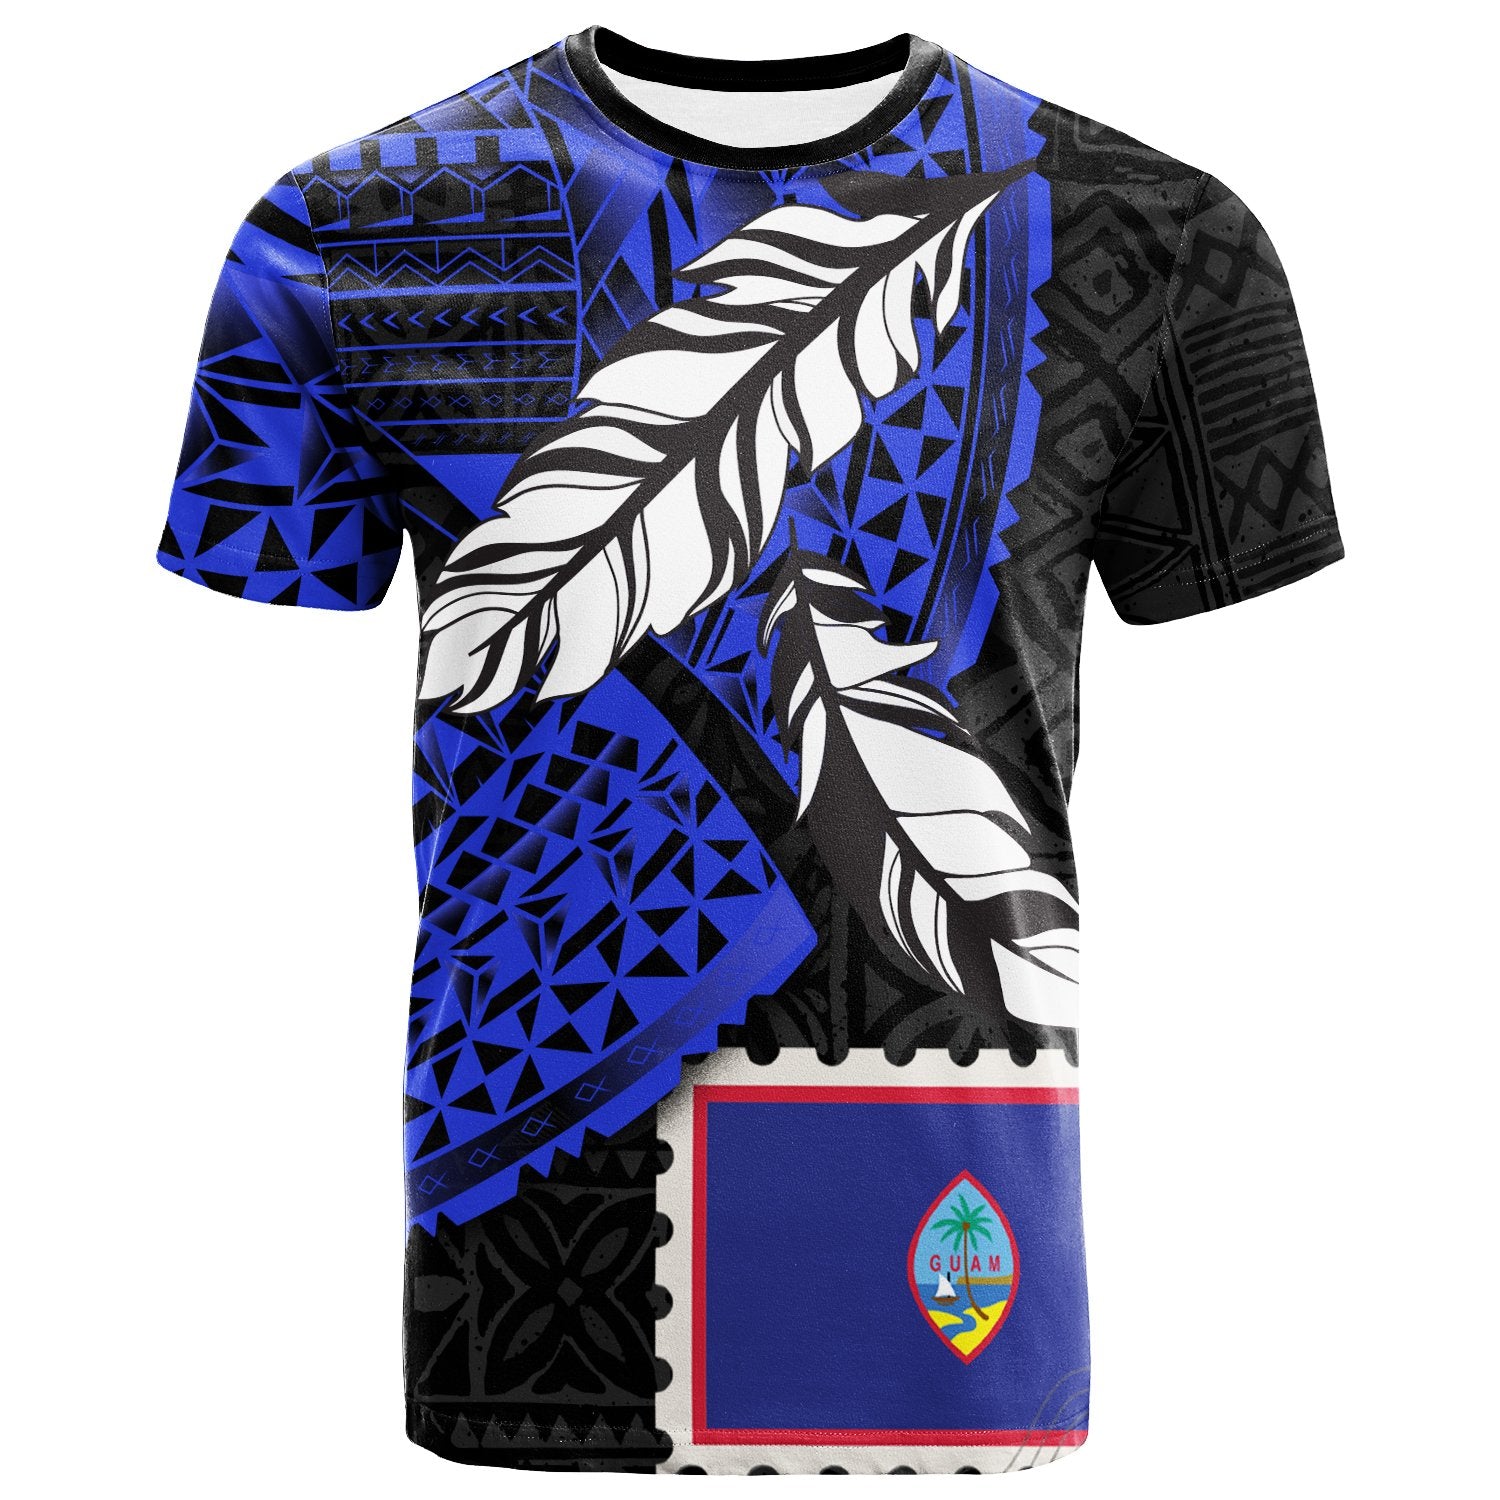 Guam T Shirt Guam Stamp Unisex BLUE - Polynesian Pride